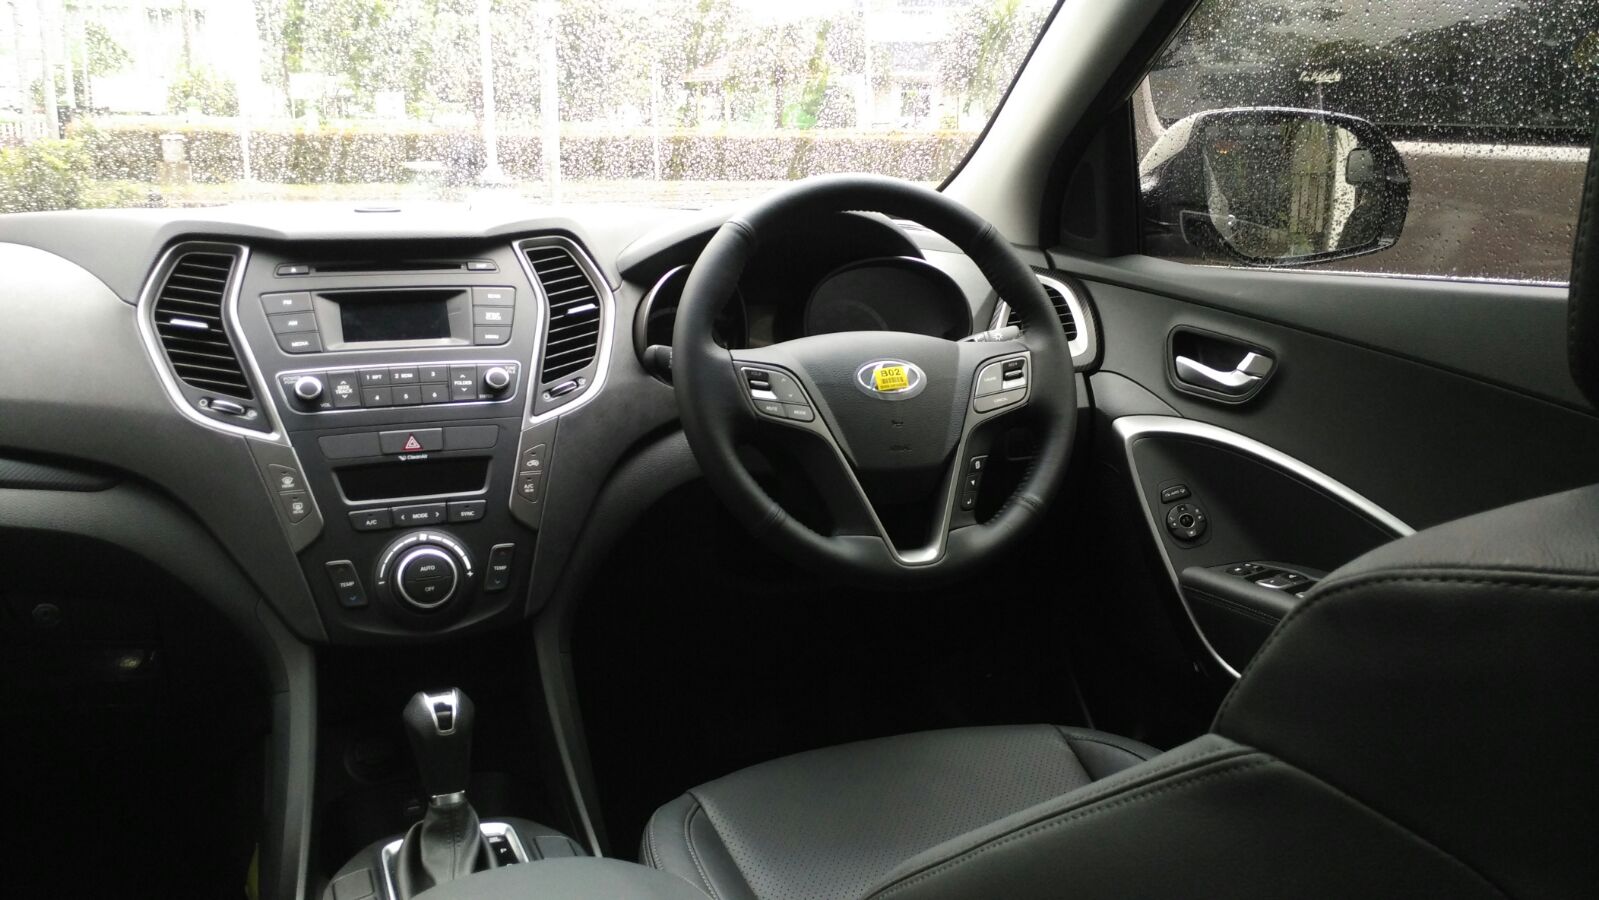 Hyundai Santa Fe Interior Facelift 2016